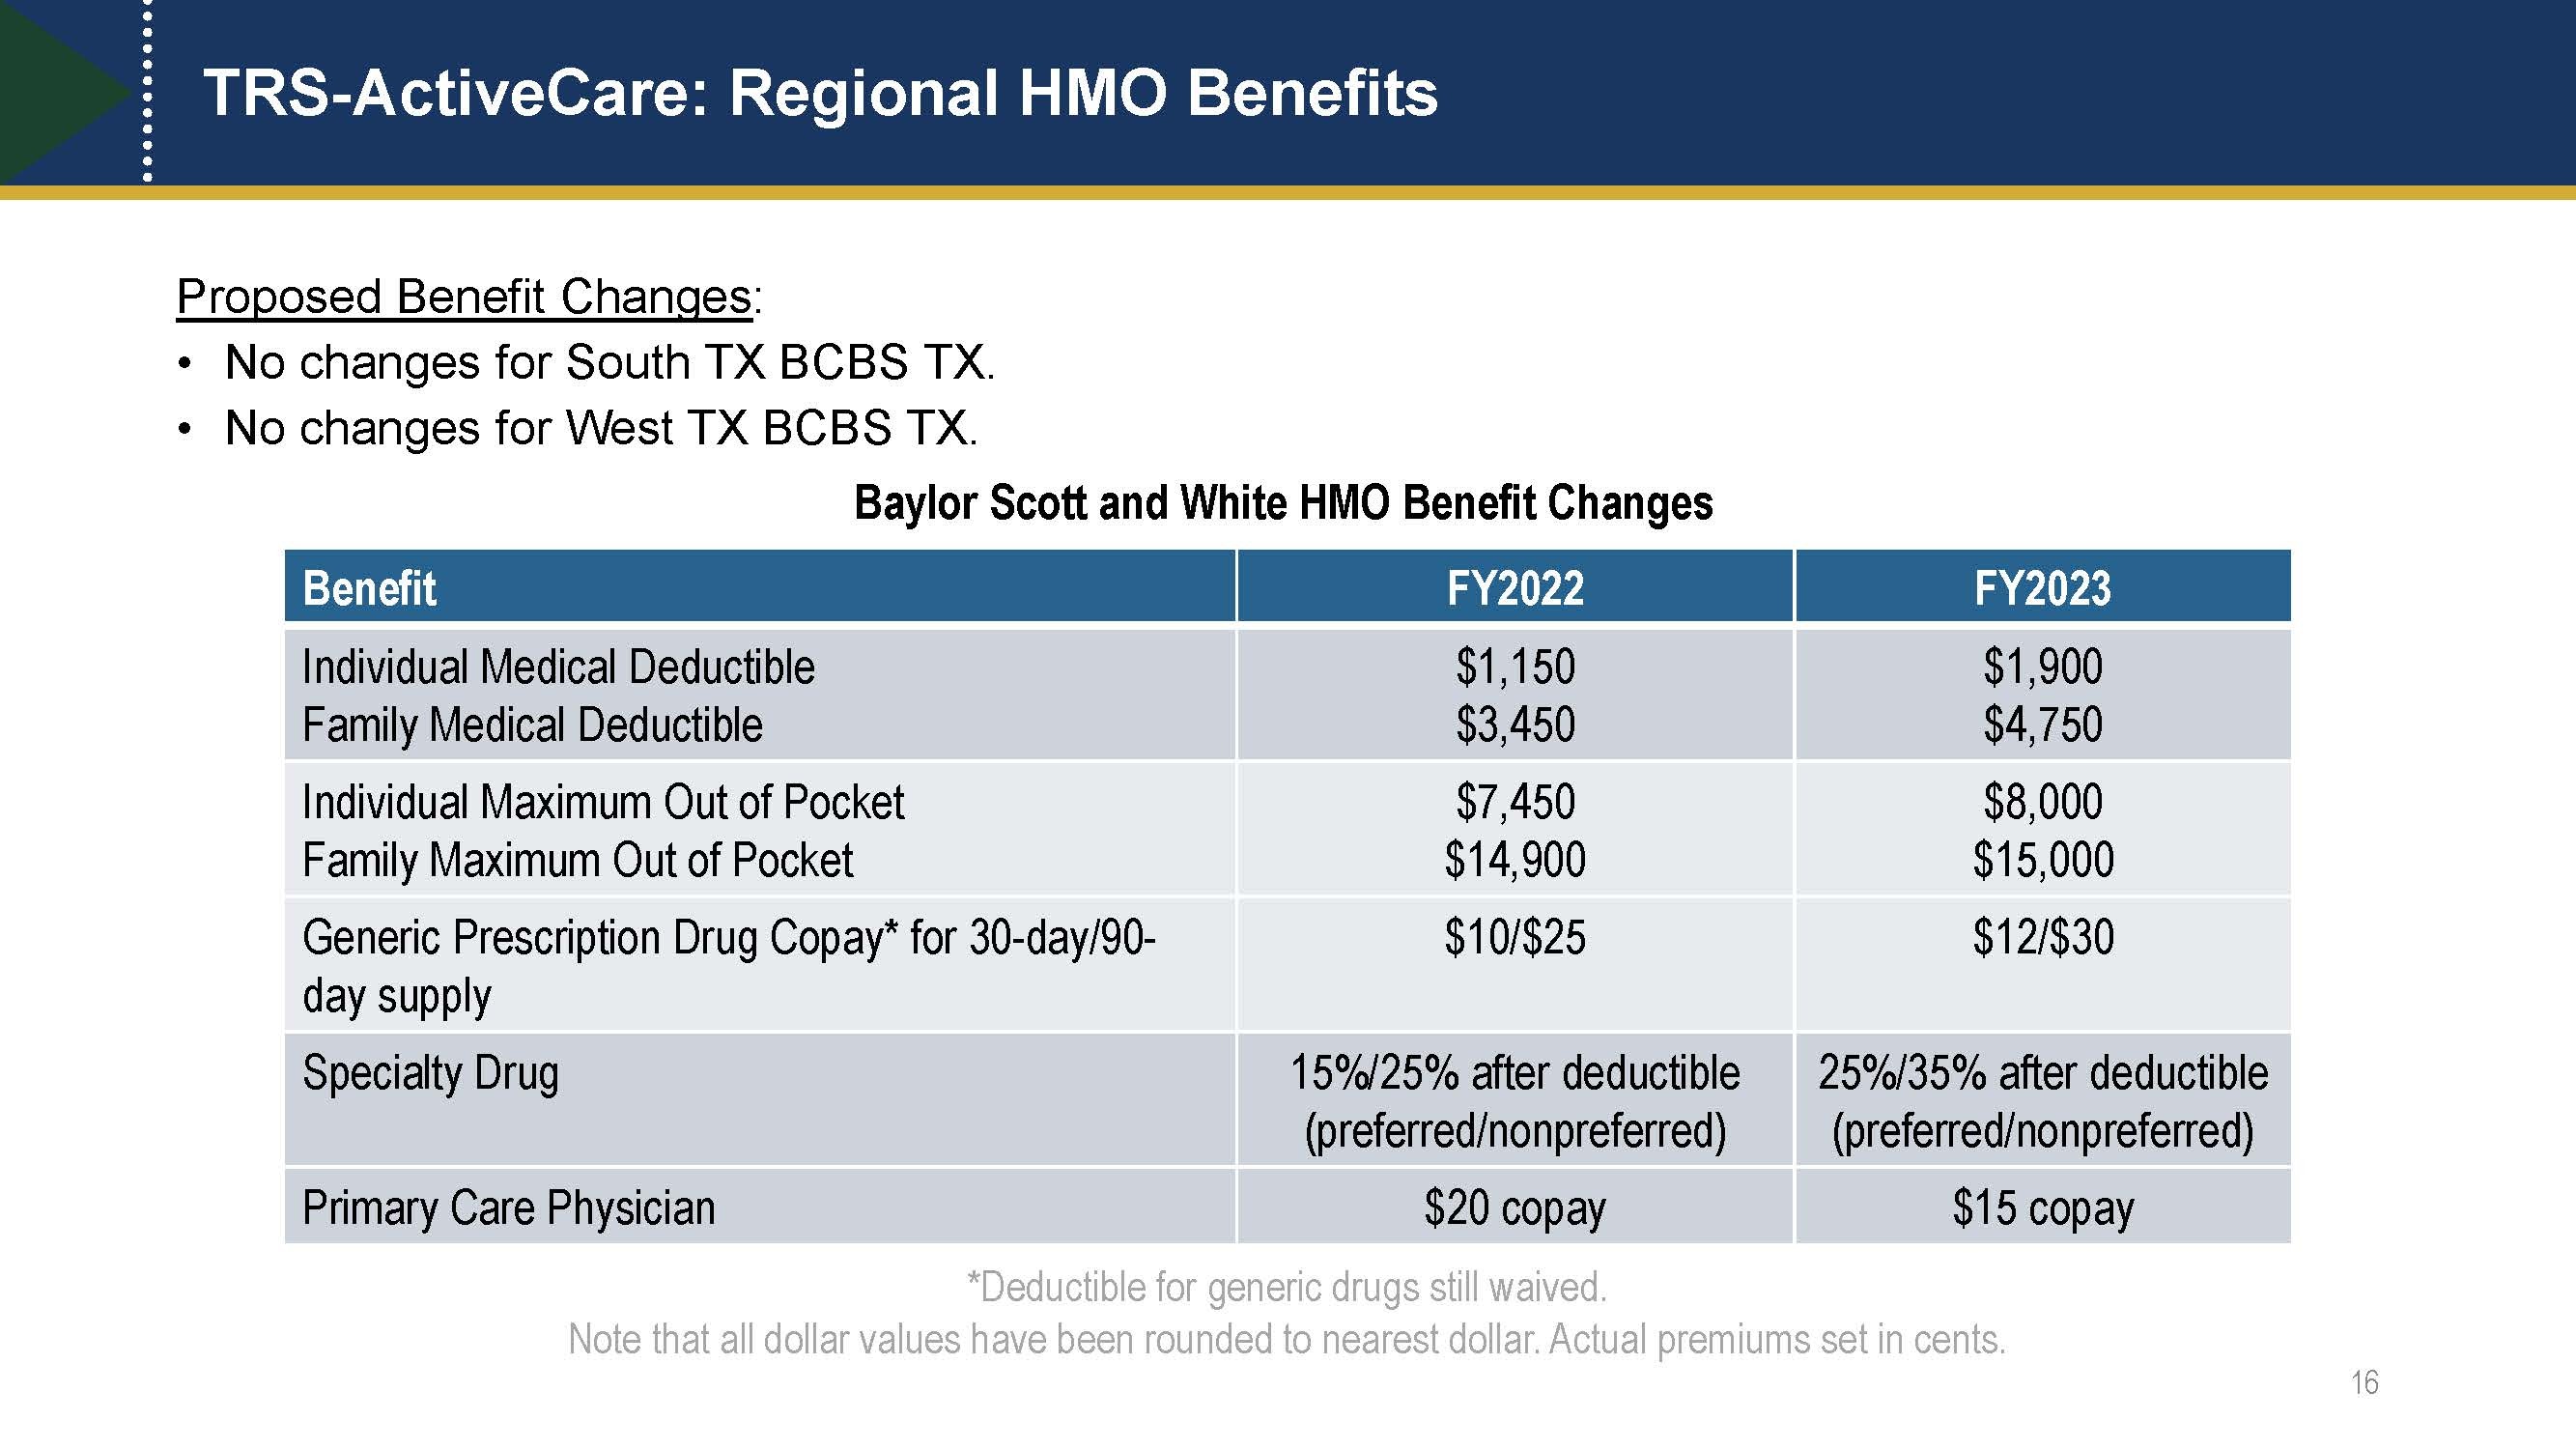 Regional HMO Benefits